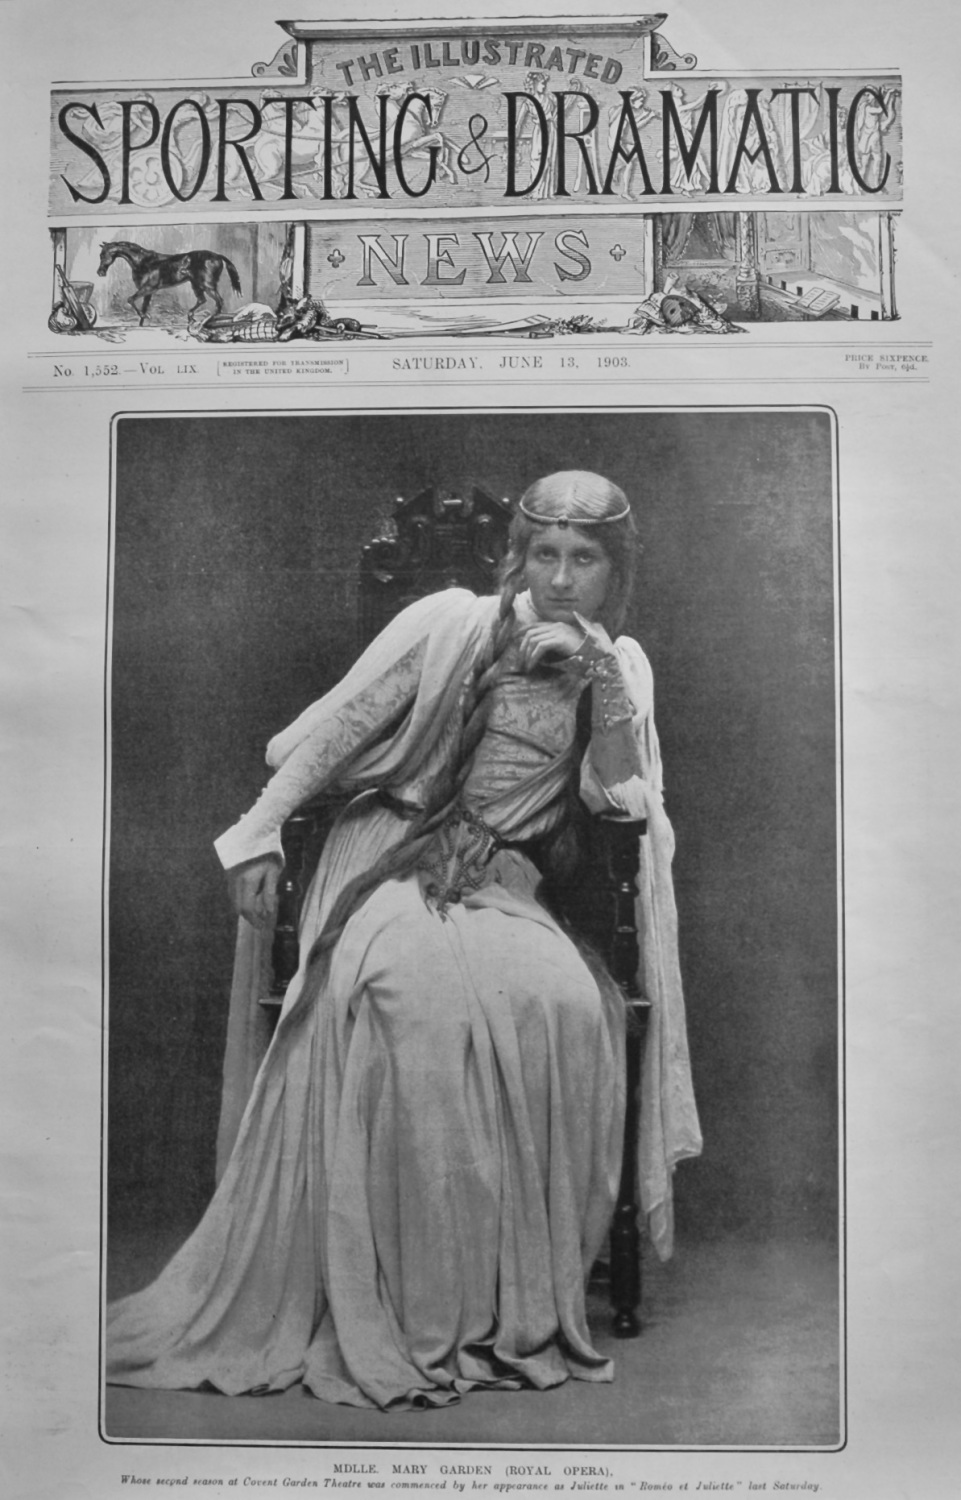 Mdlle. Mary Garden (Royal Opera), whose second season at Covent Garden Thea